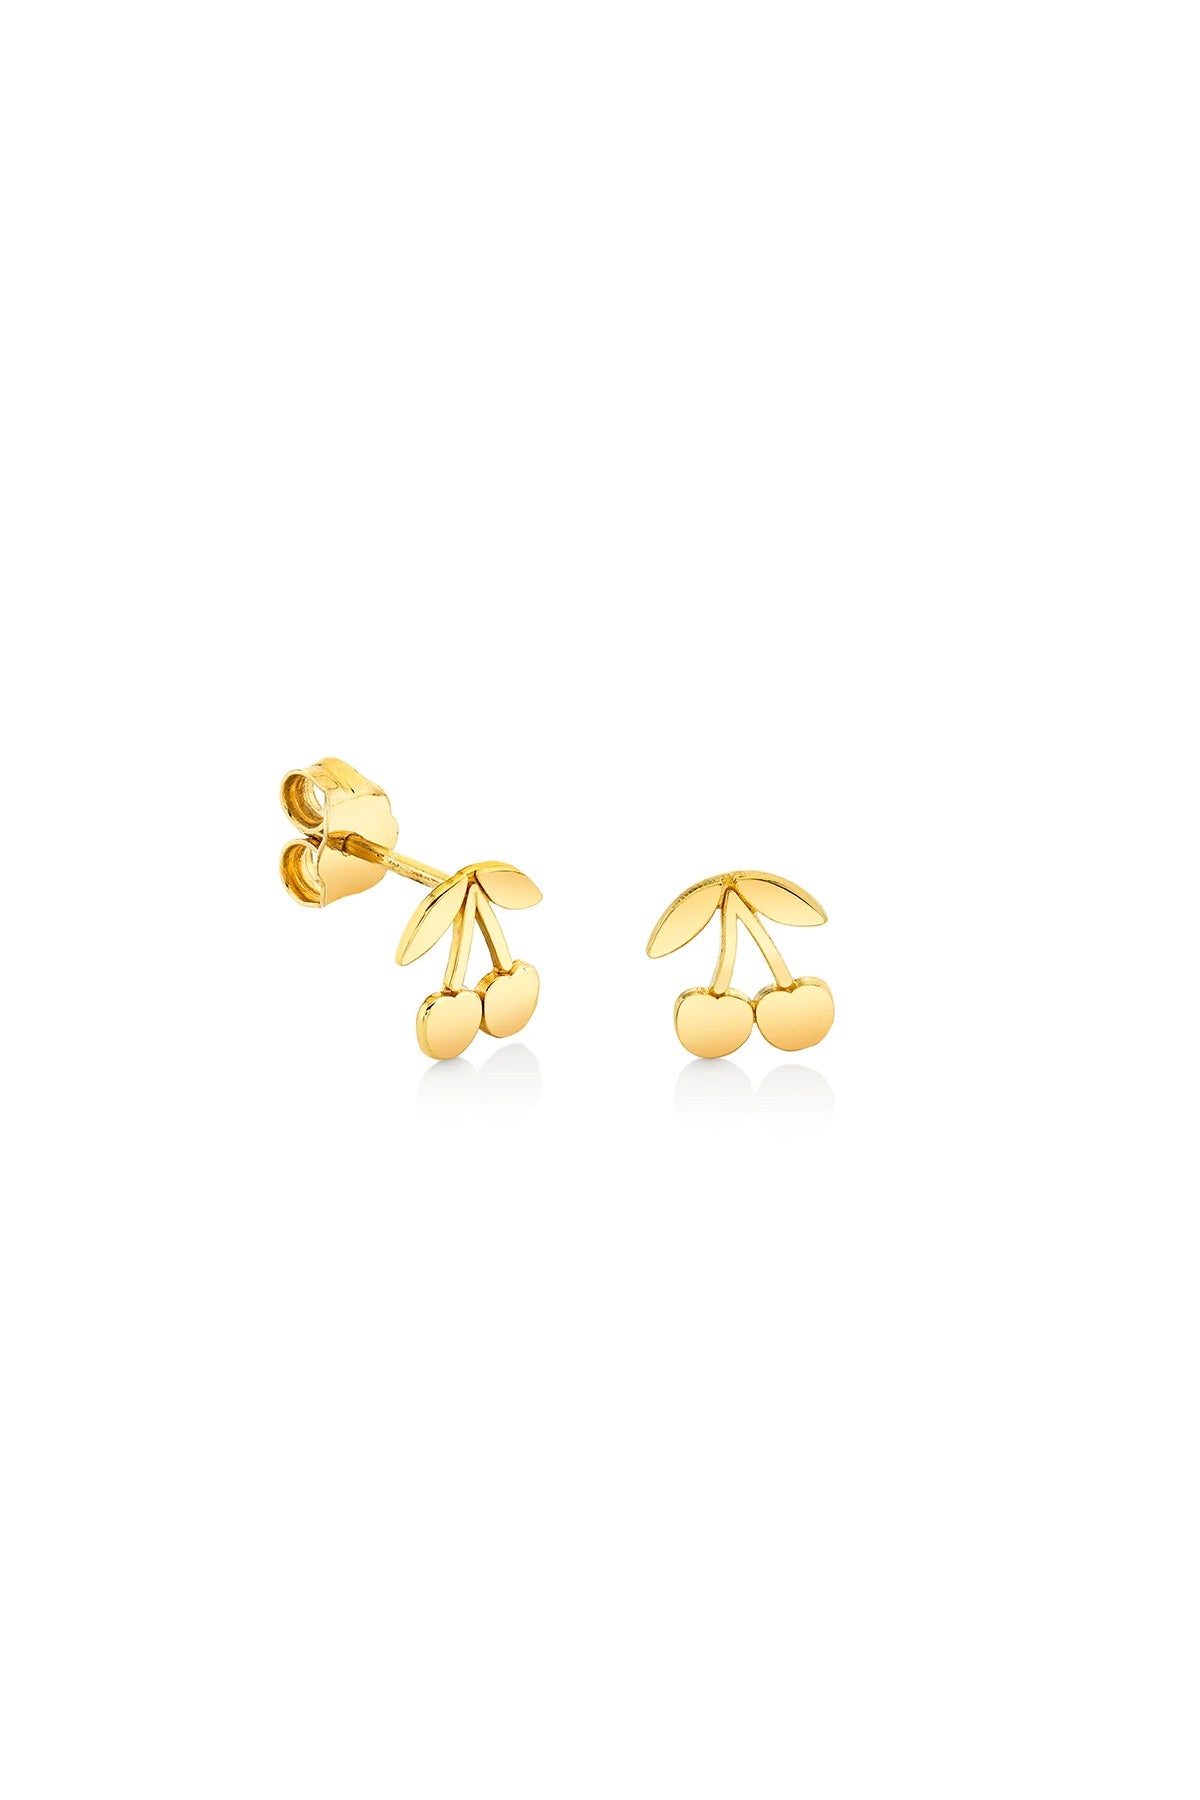 Sydney Evan Pure Gold Tiny Cherry Stud Earrings - Yellow Gold